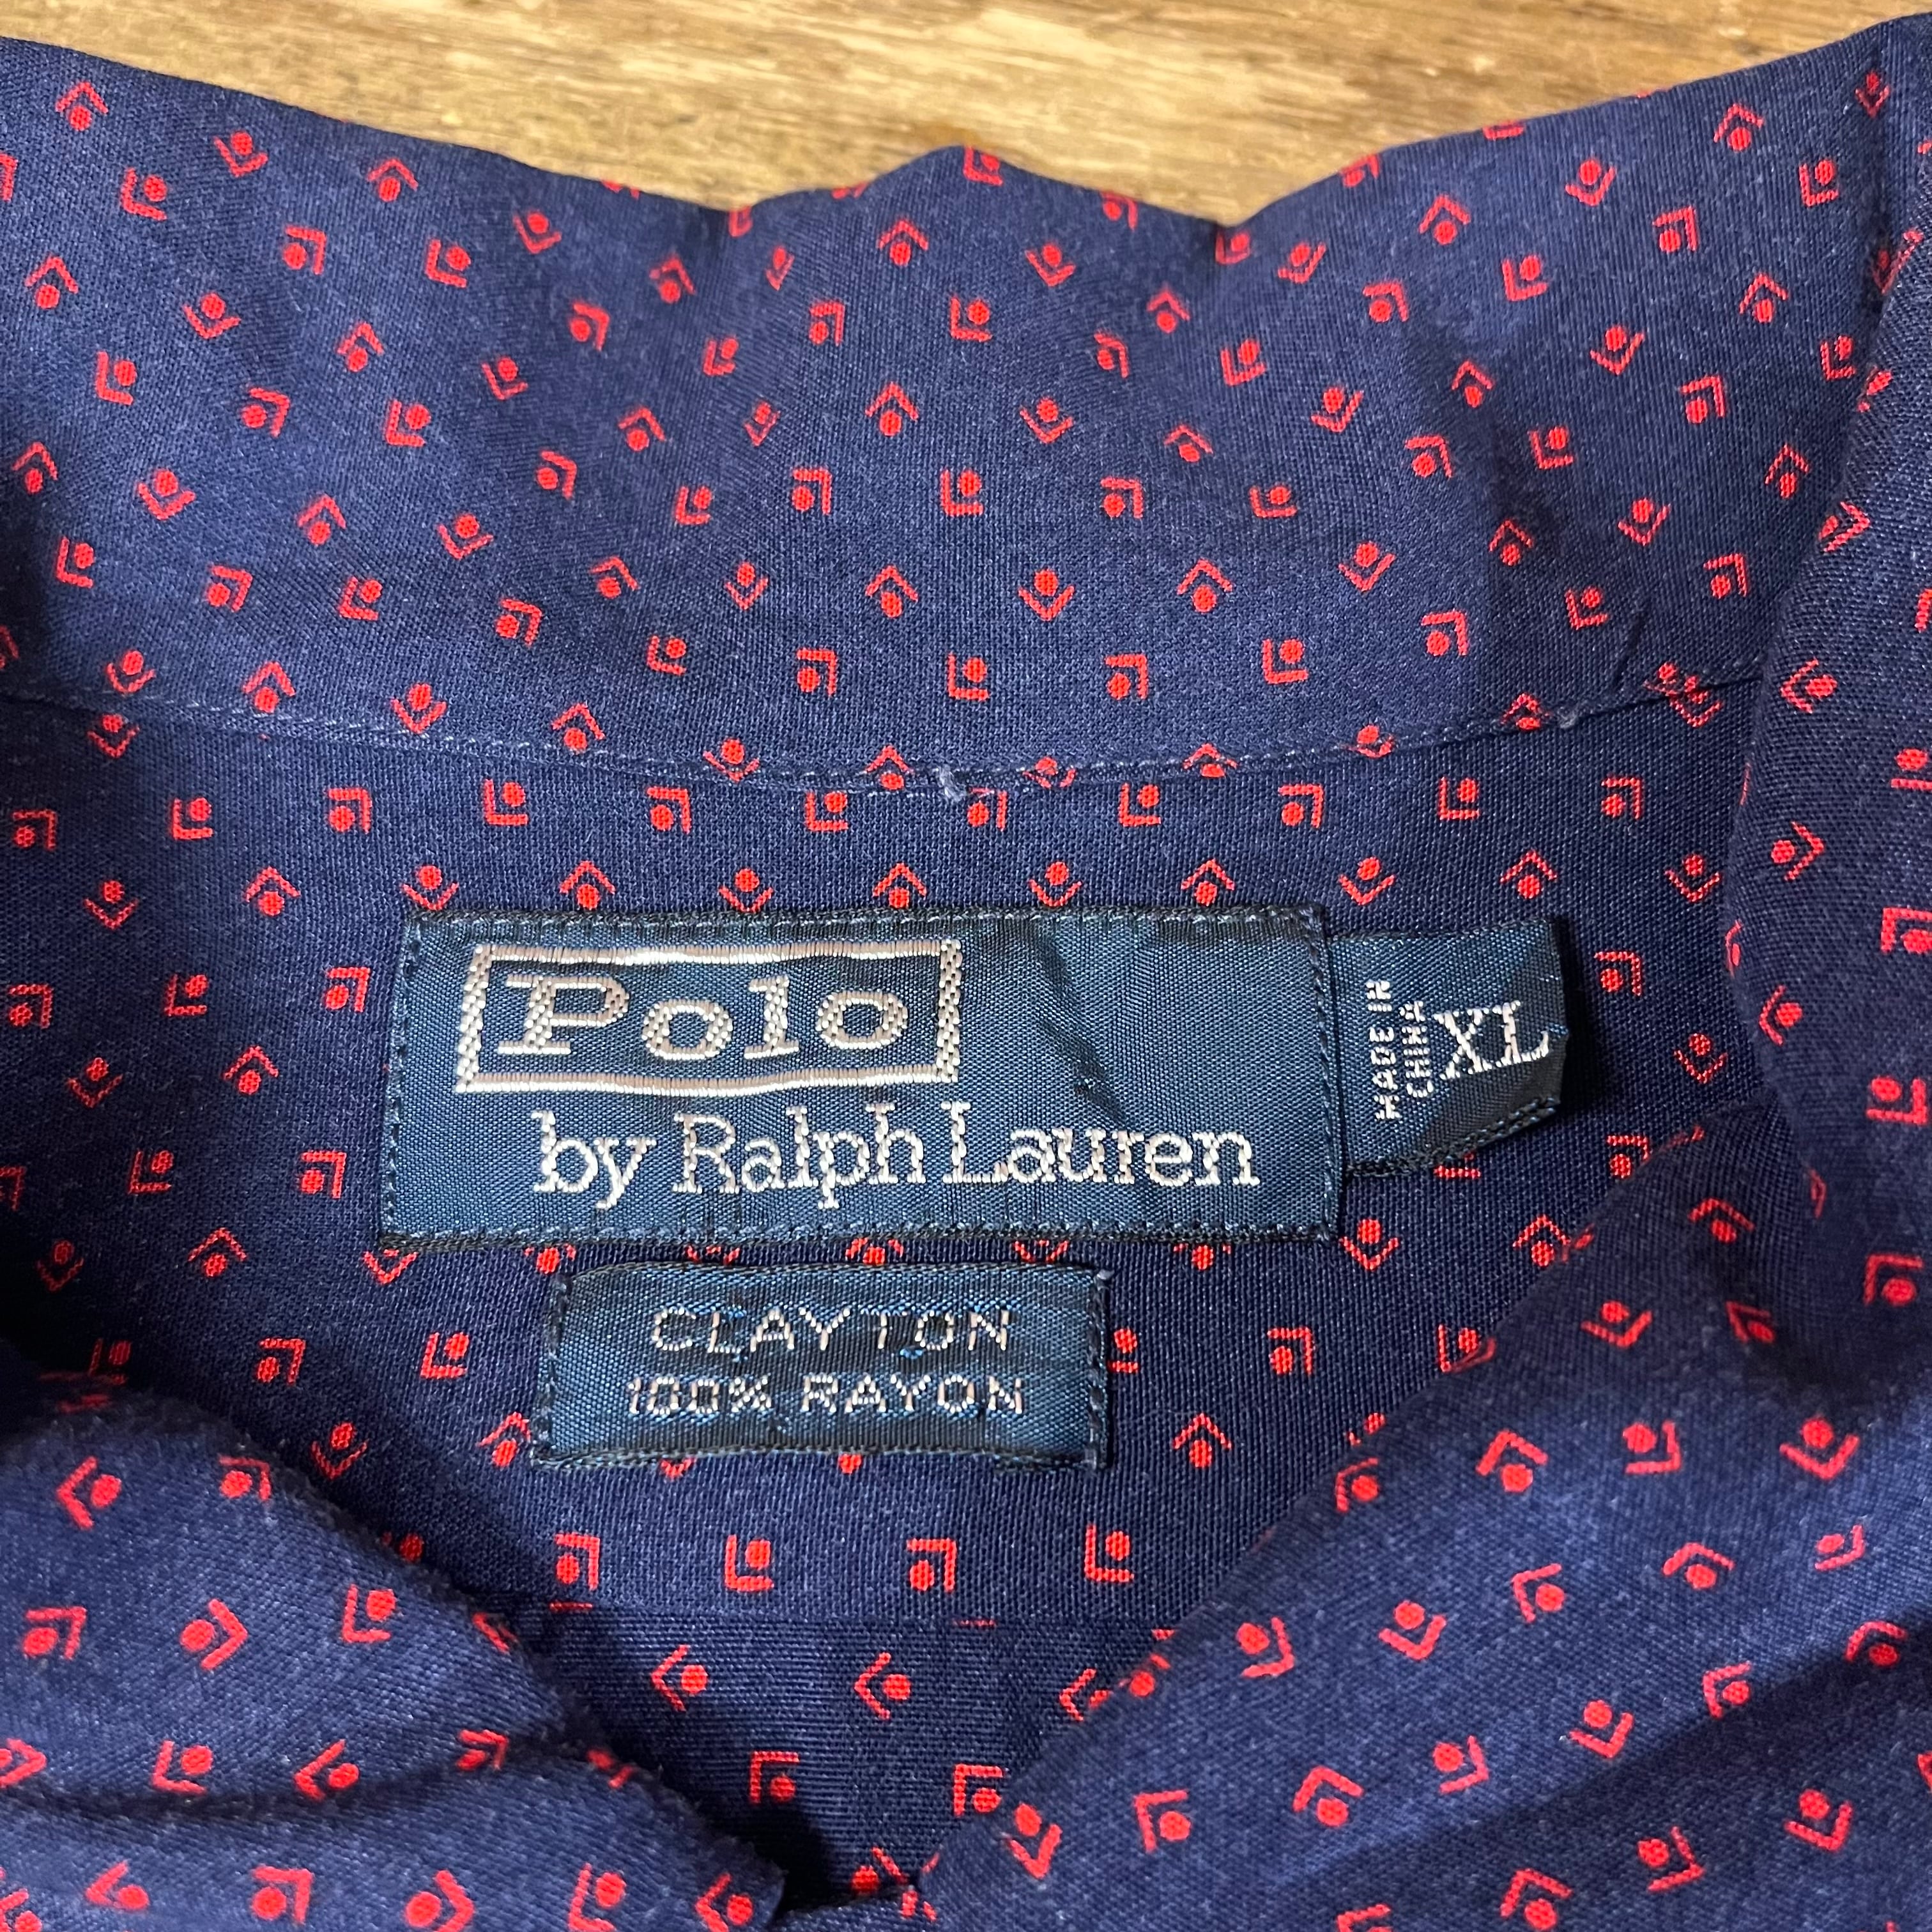 Ralph Lauren CLAYTON Rayon Opencollar Shirts